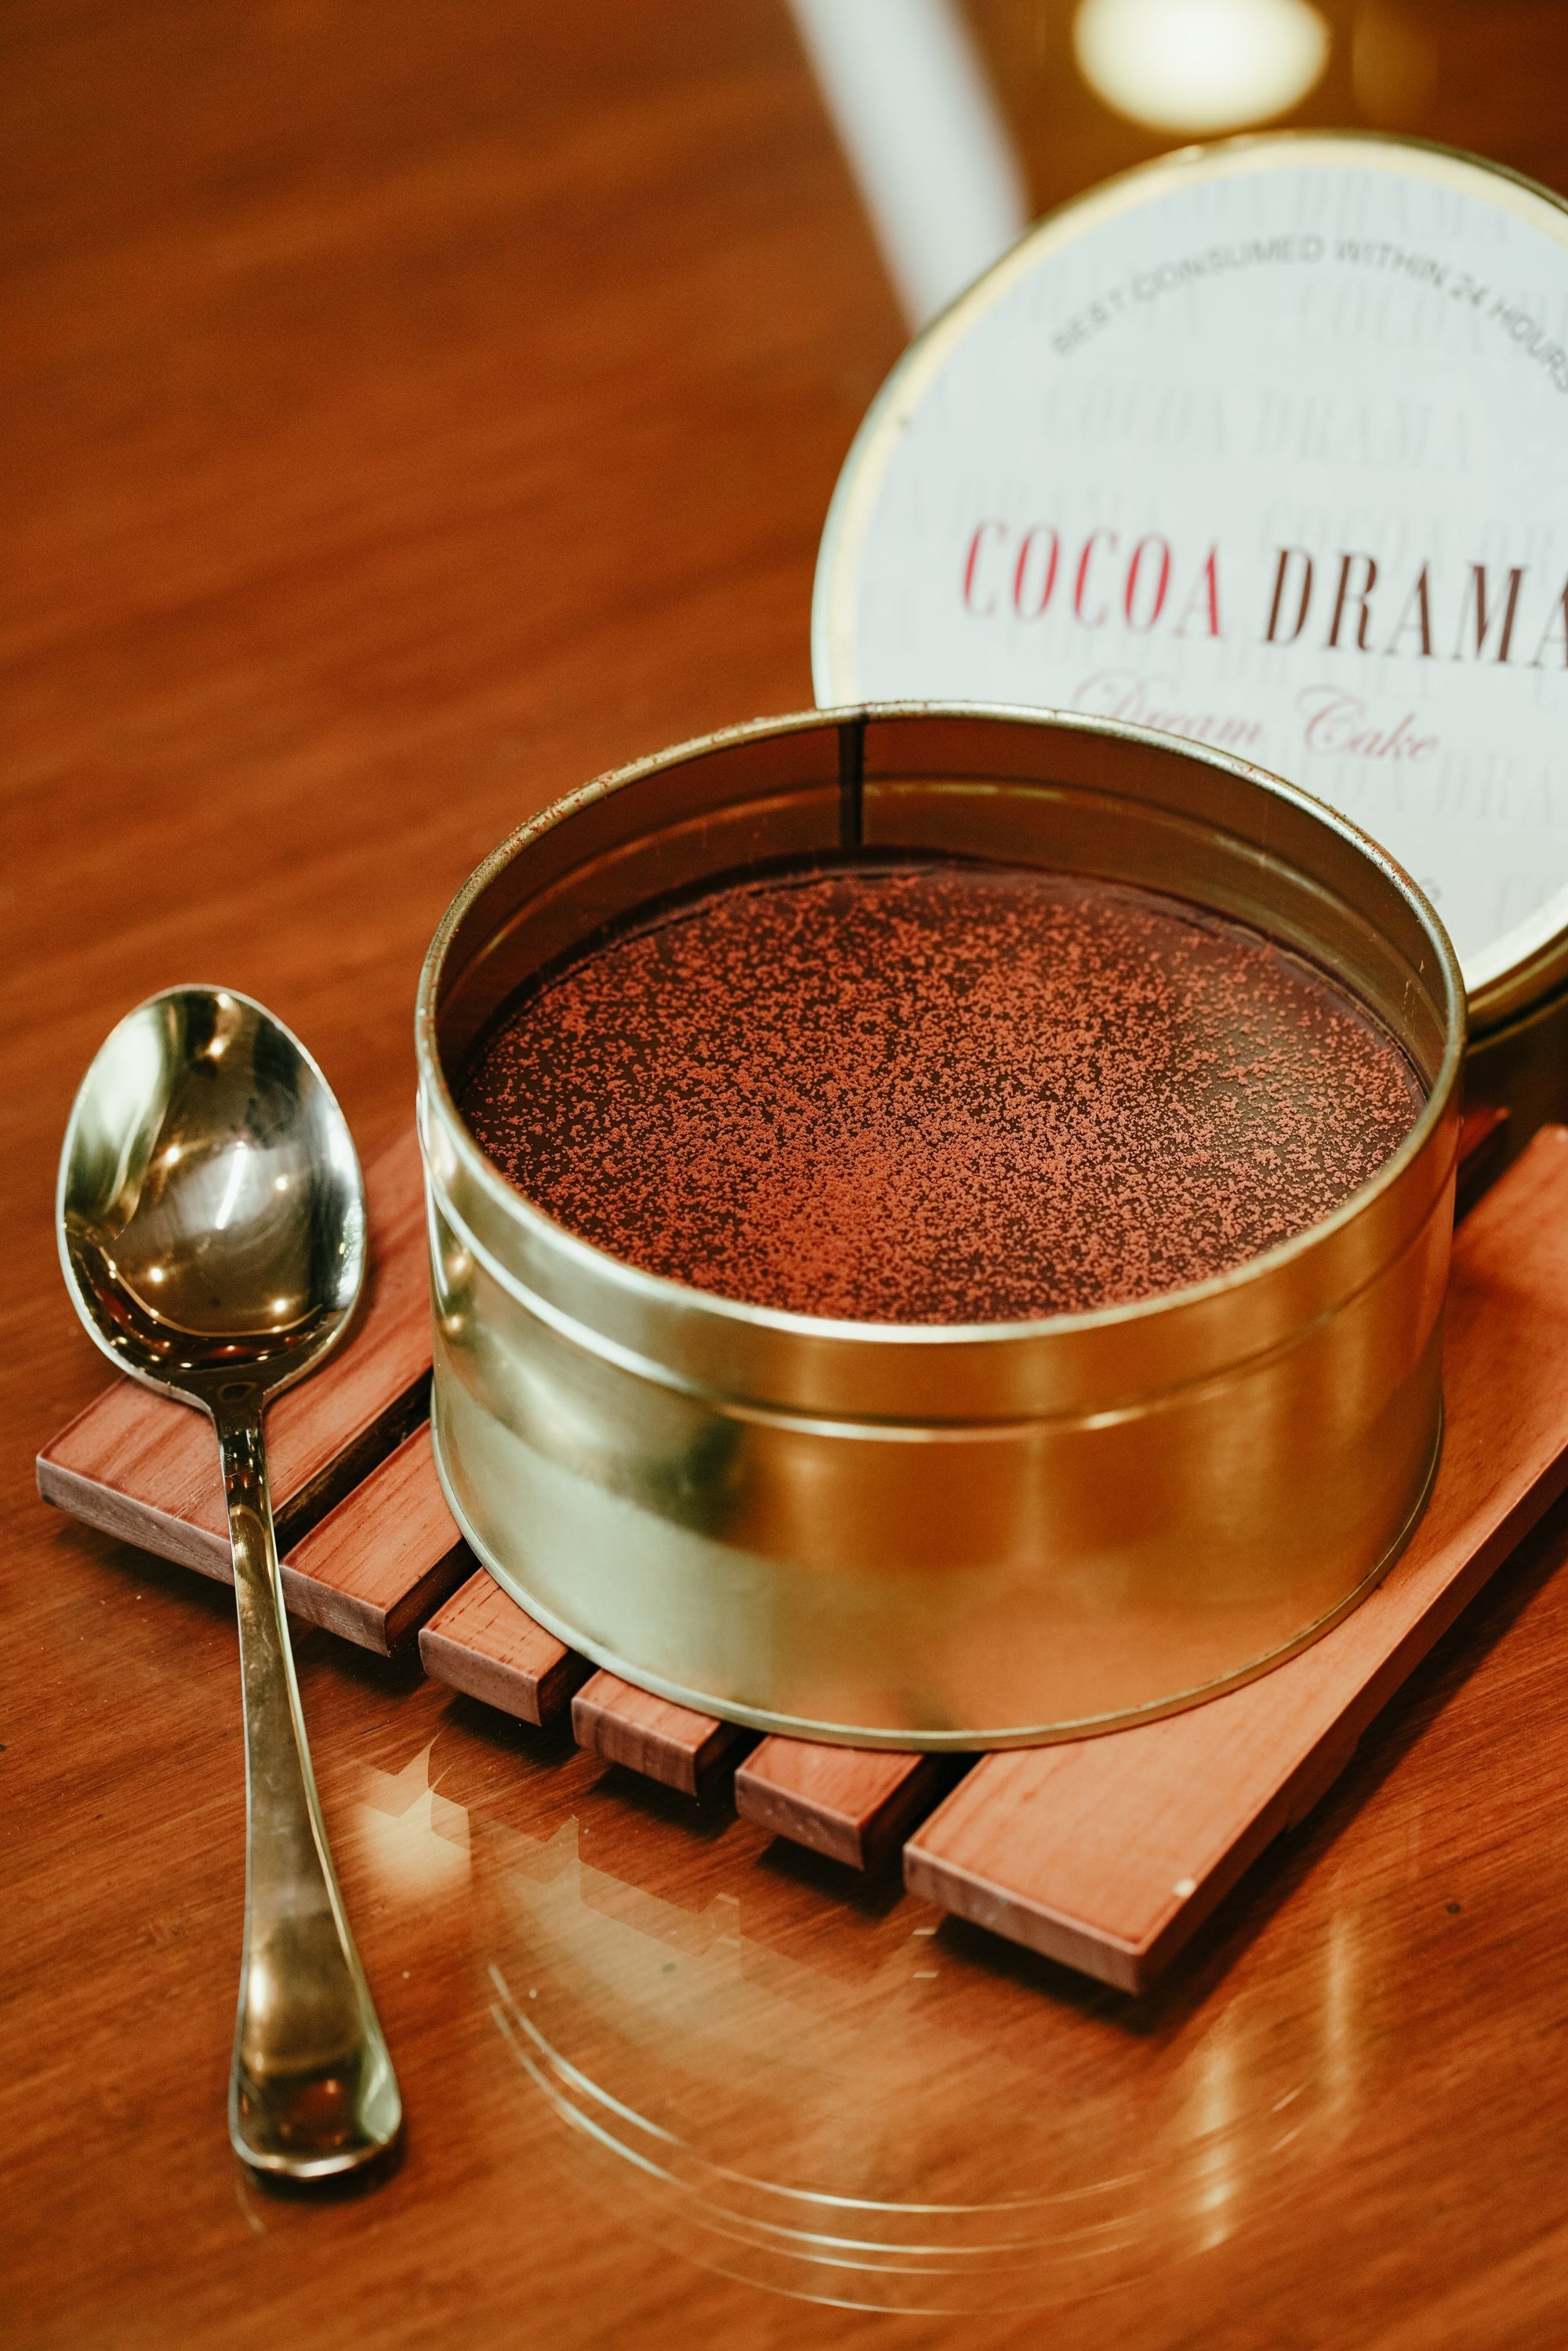 Cherry Dream Cake Recipe: How to Make It